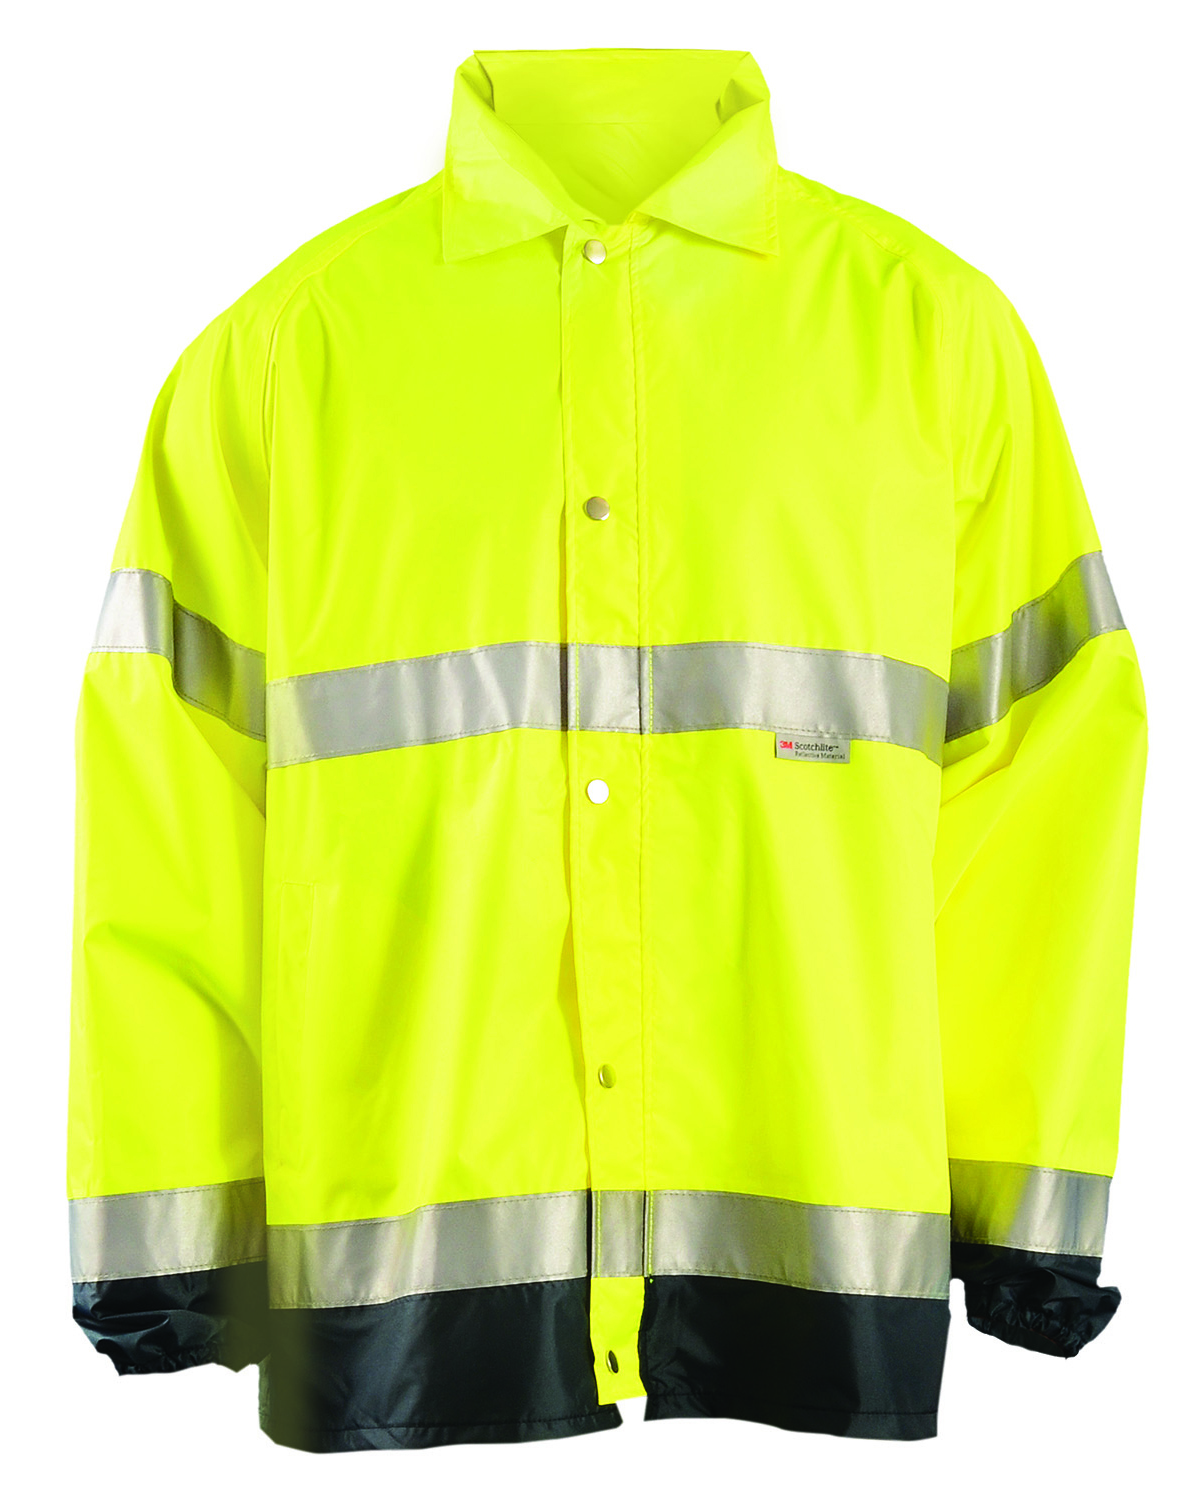 OccuNomix LUXTJR - Men's Premium Flame Resistant Rain Jacket